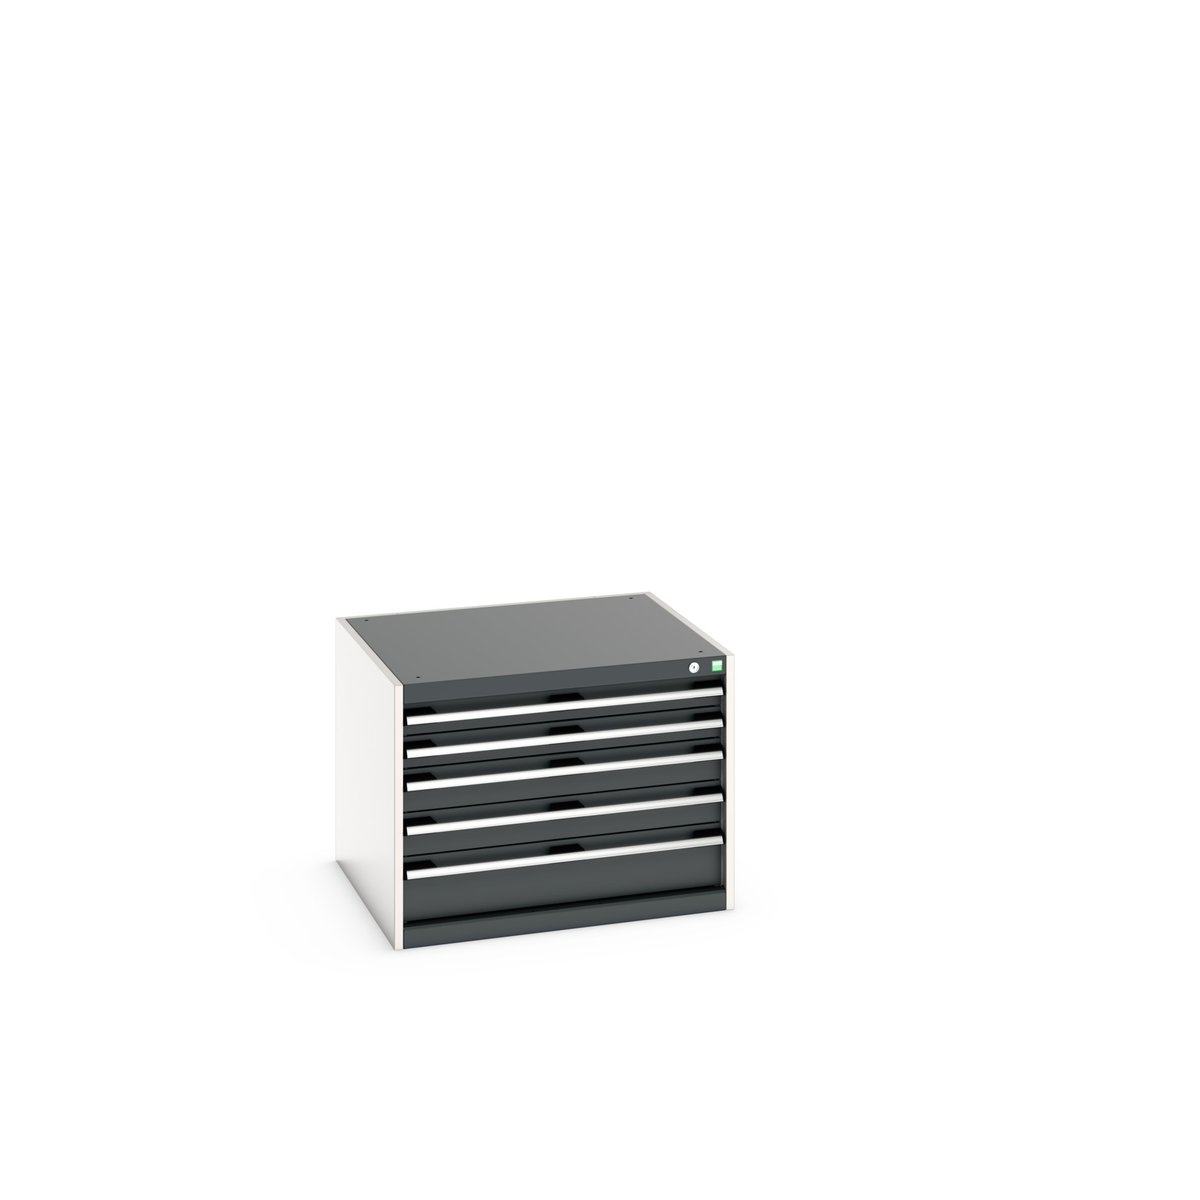 40028093. - cubio drawer cabinet